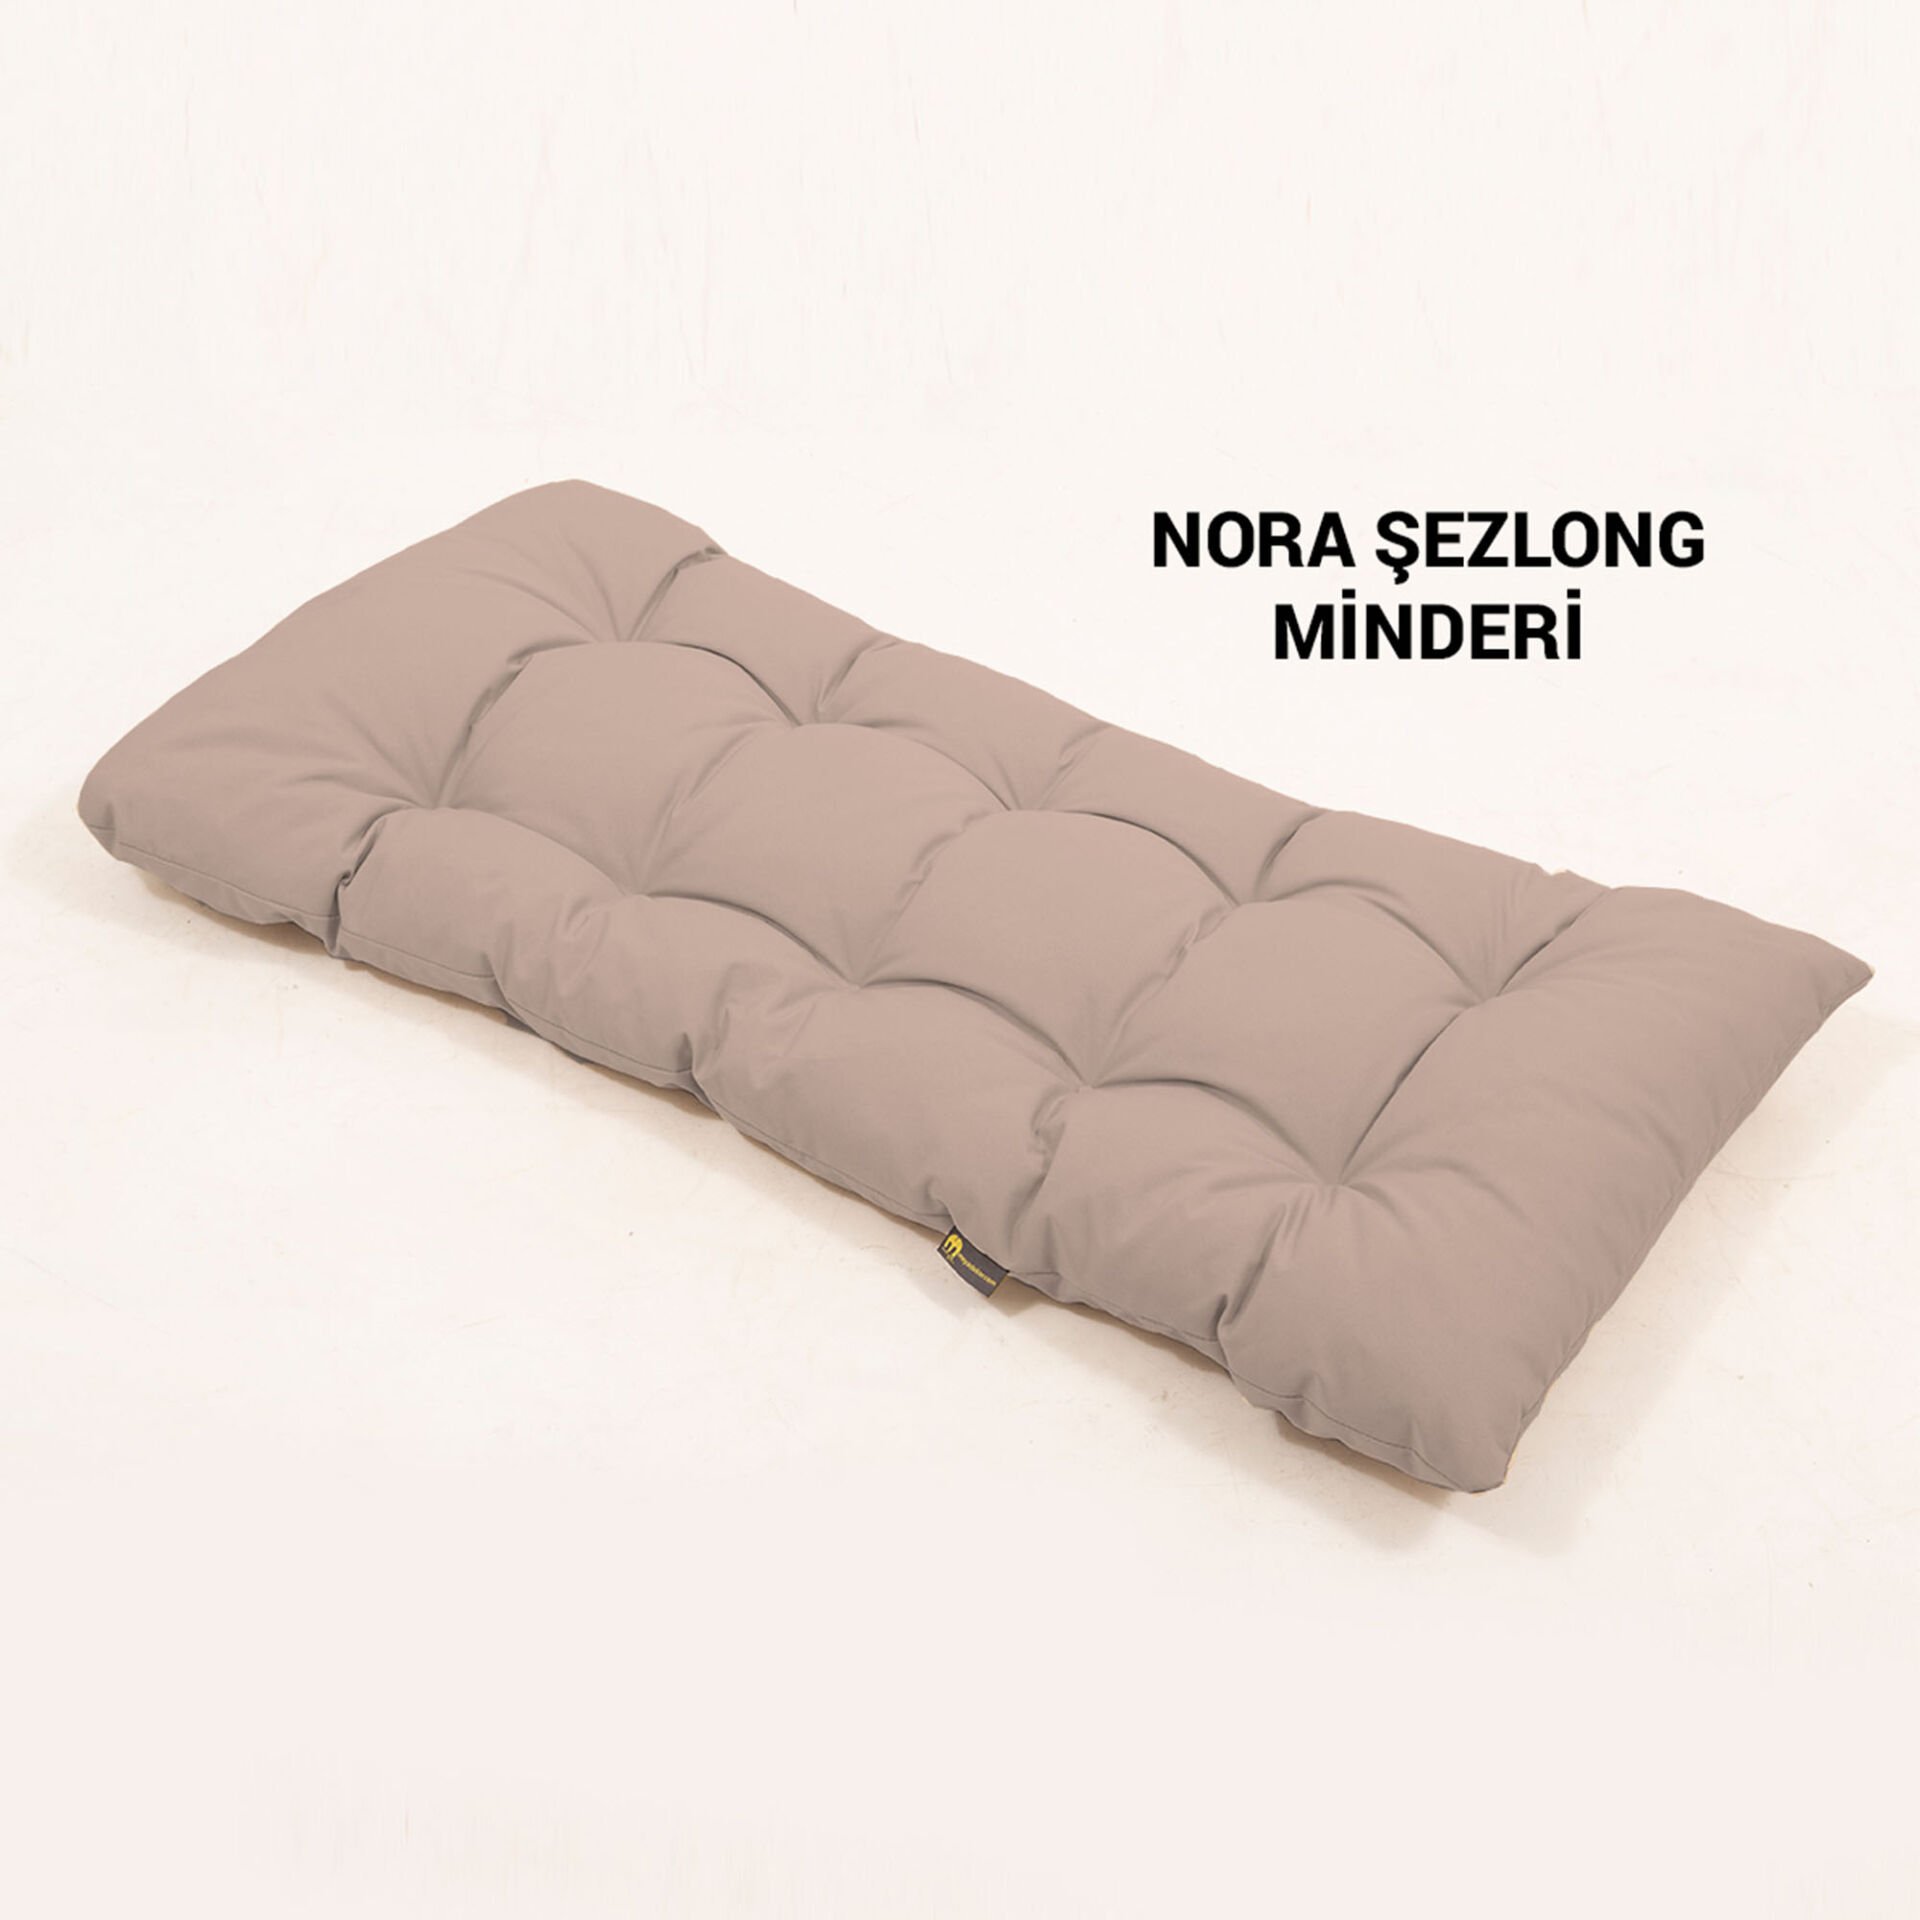 NORA Şezlong Minderi - Vizon